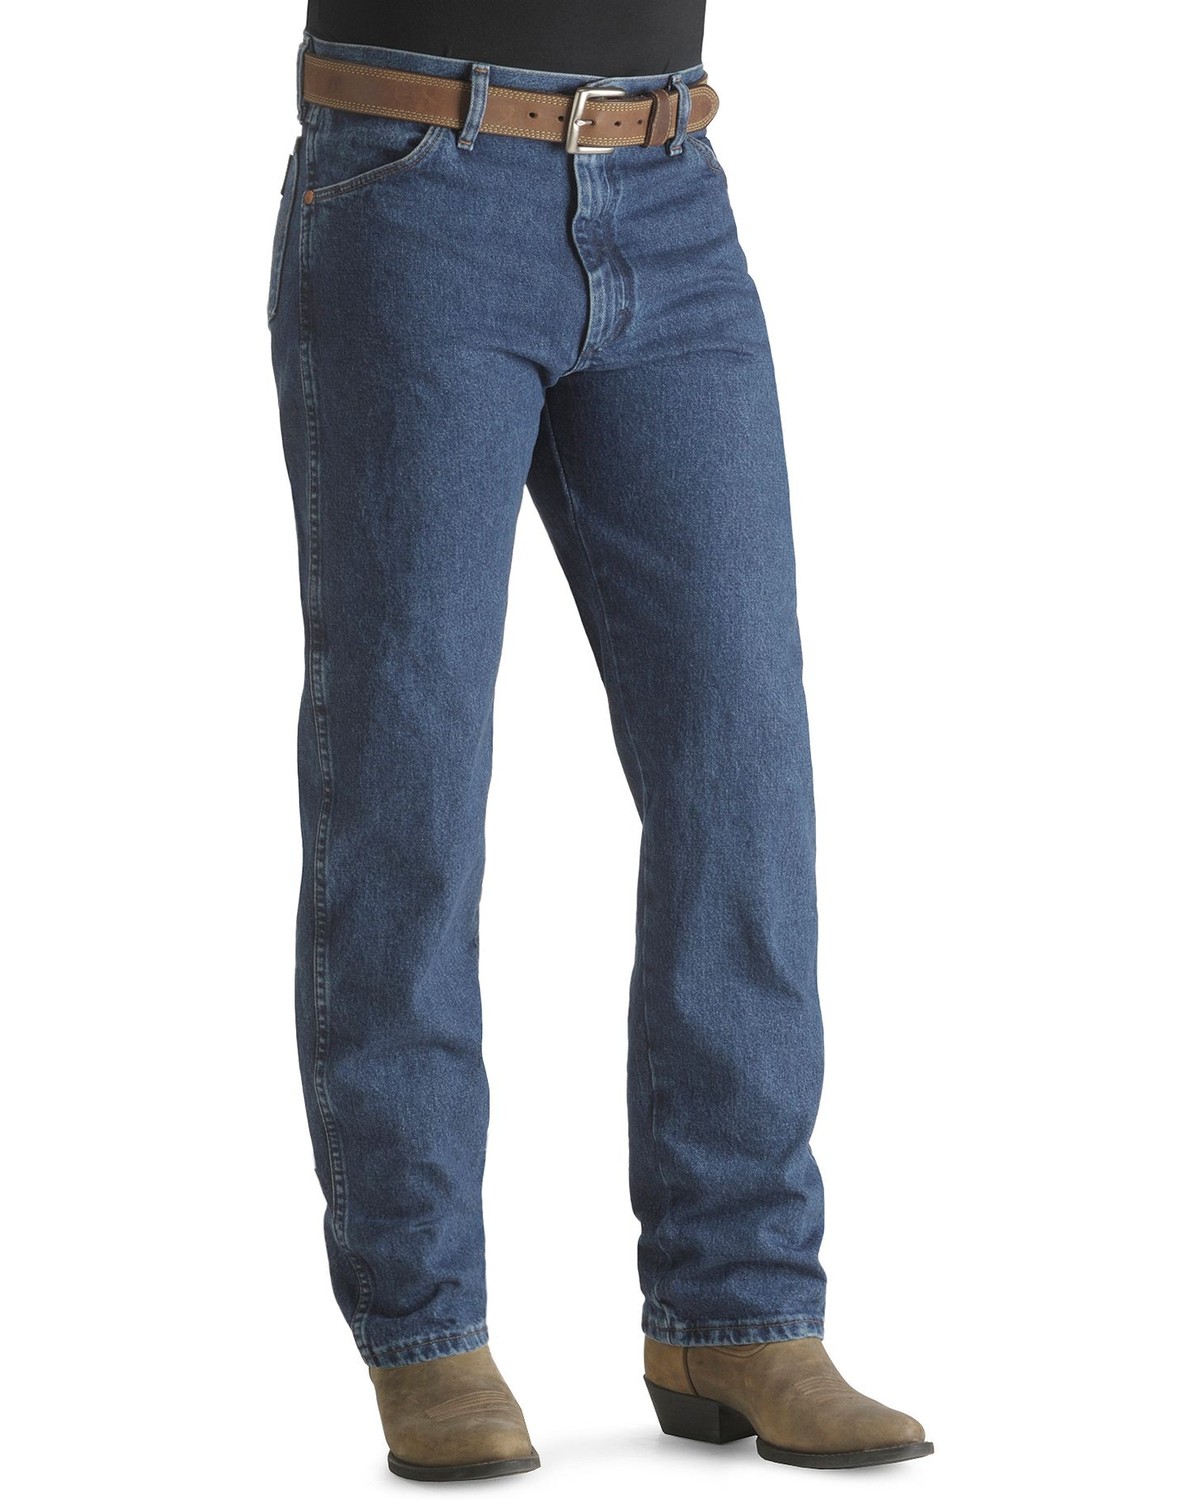 Wrangler 13MWZ Jeans Cowboy Cut Original Fit Prewashed Jeans | Sheplers